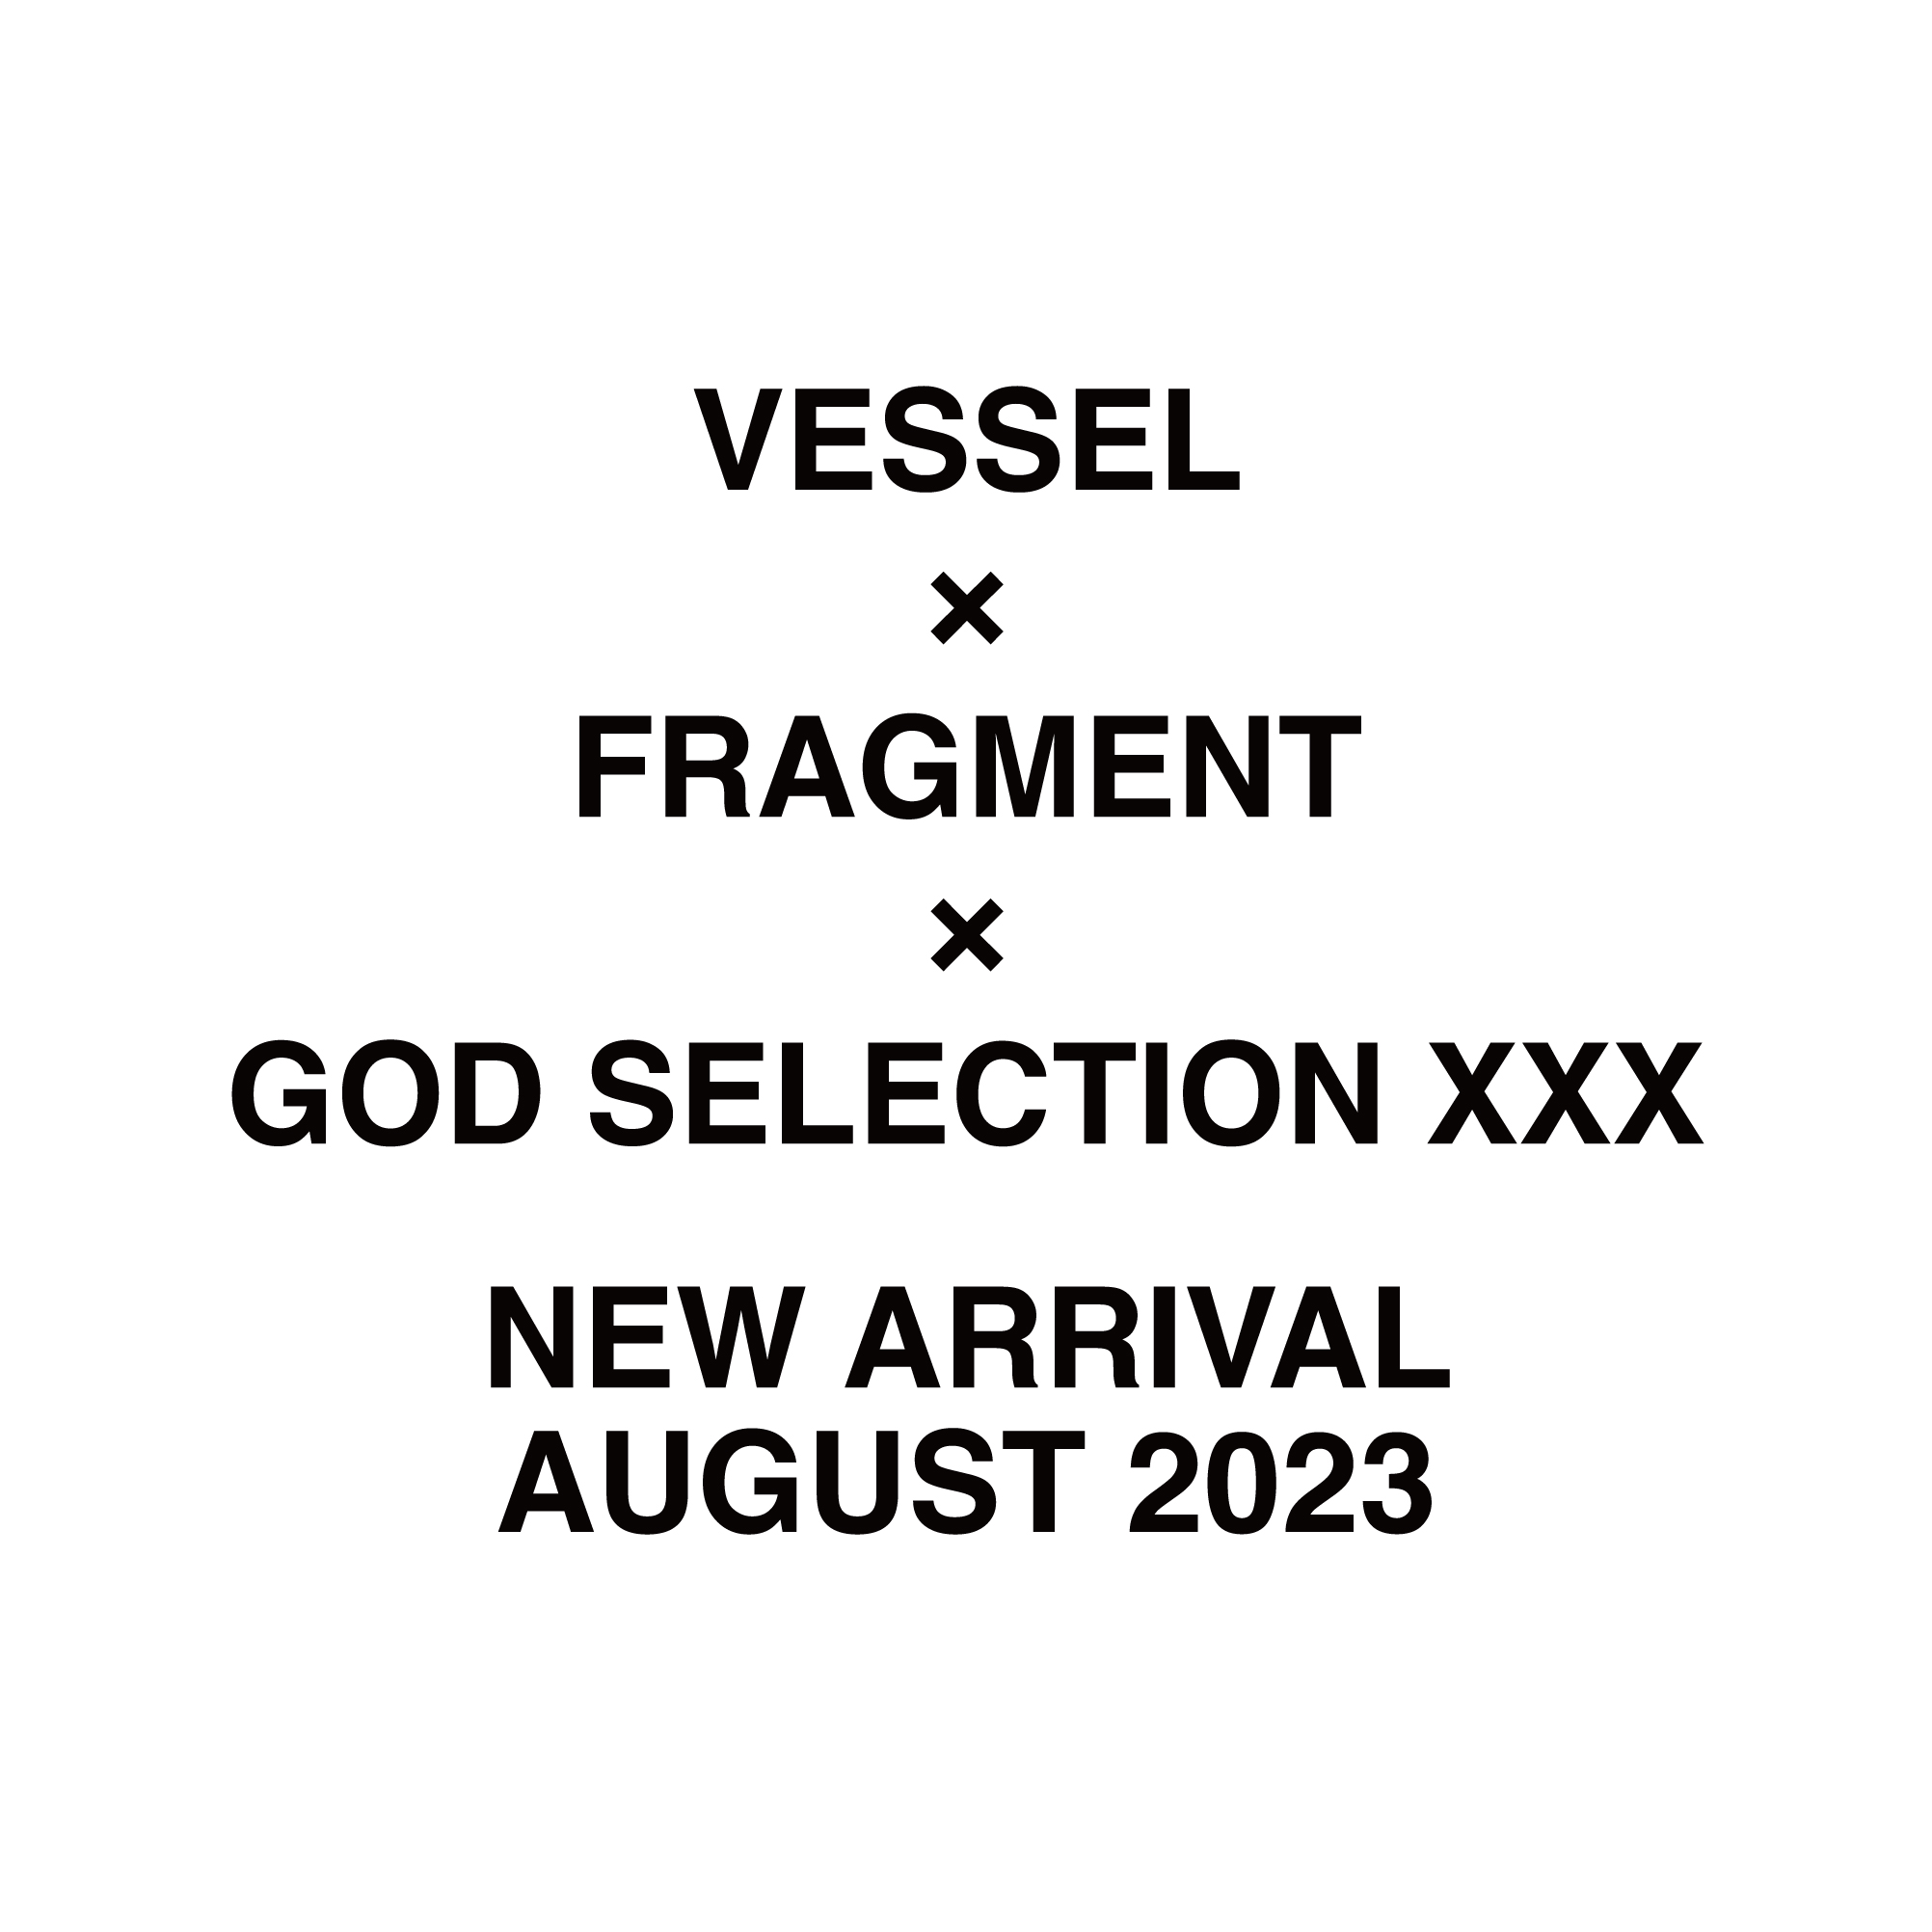 VESSEL × FRAGMENT × GOD SELECTION XXX | www.fleettracktz.com